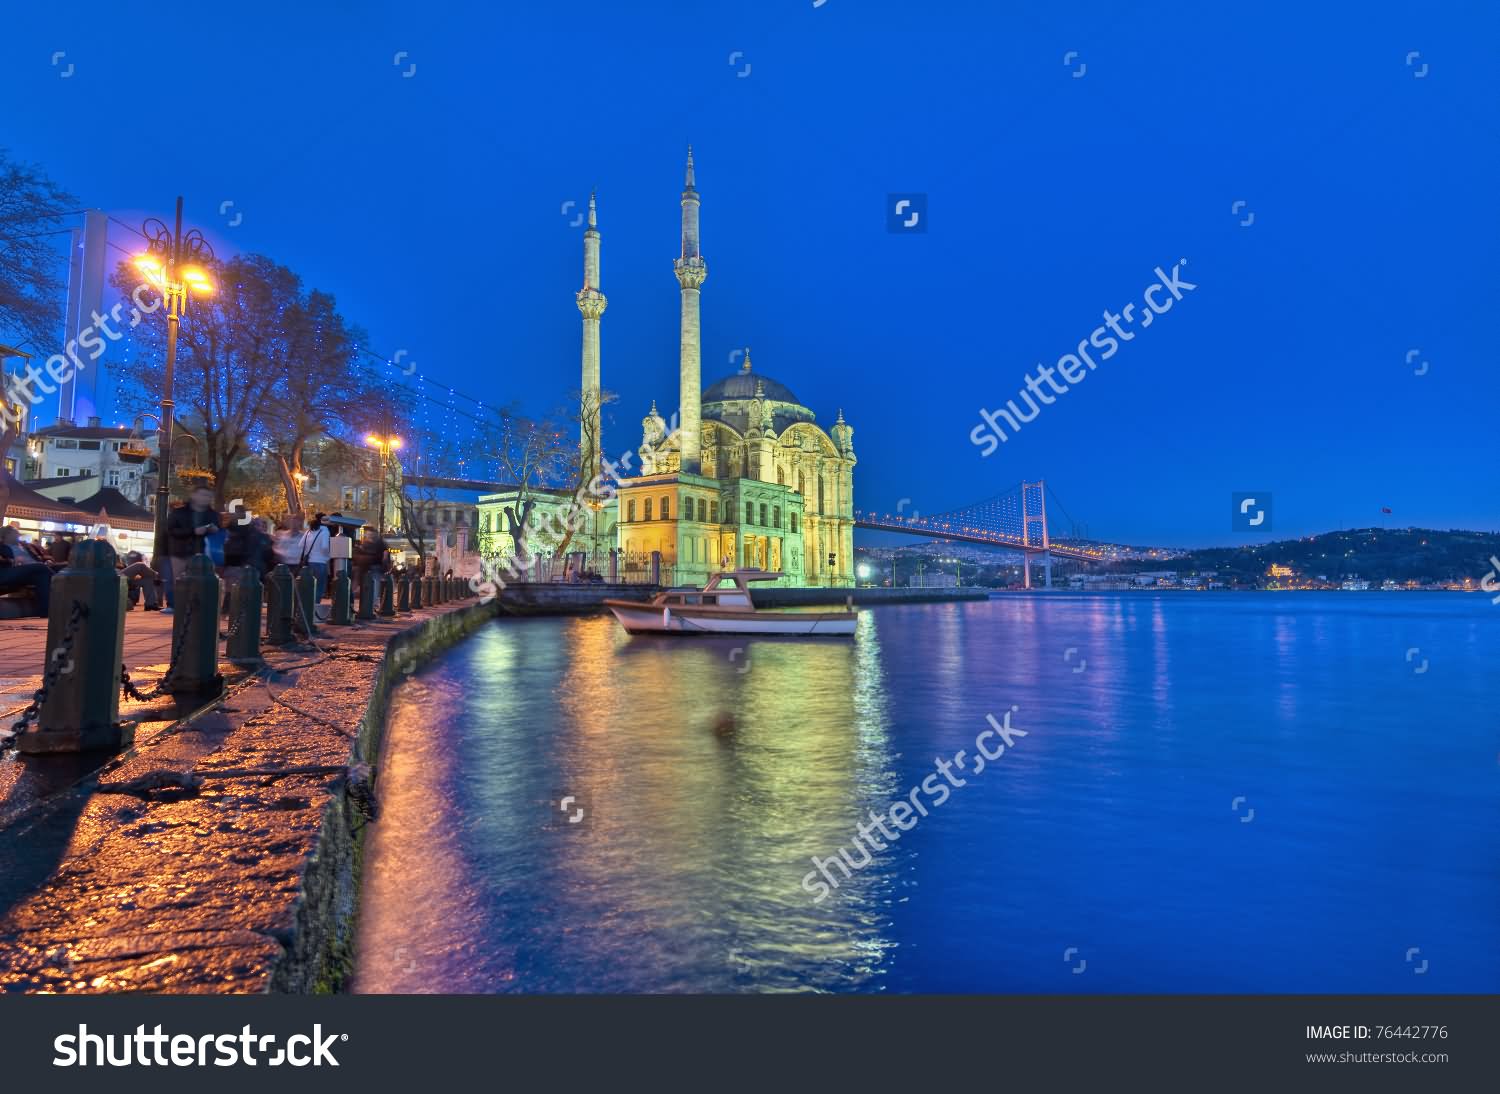 Ortakoy Mosque On The Bosphorus Shore At Night